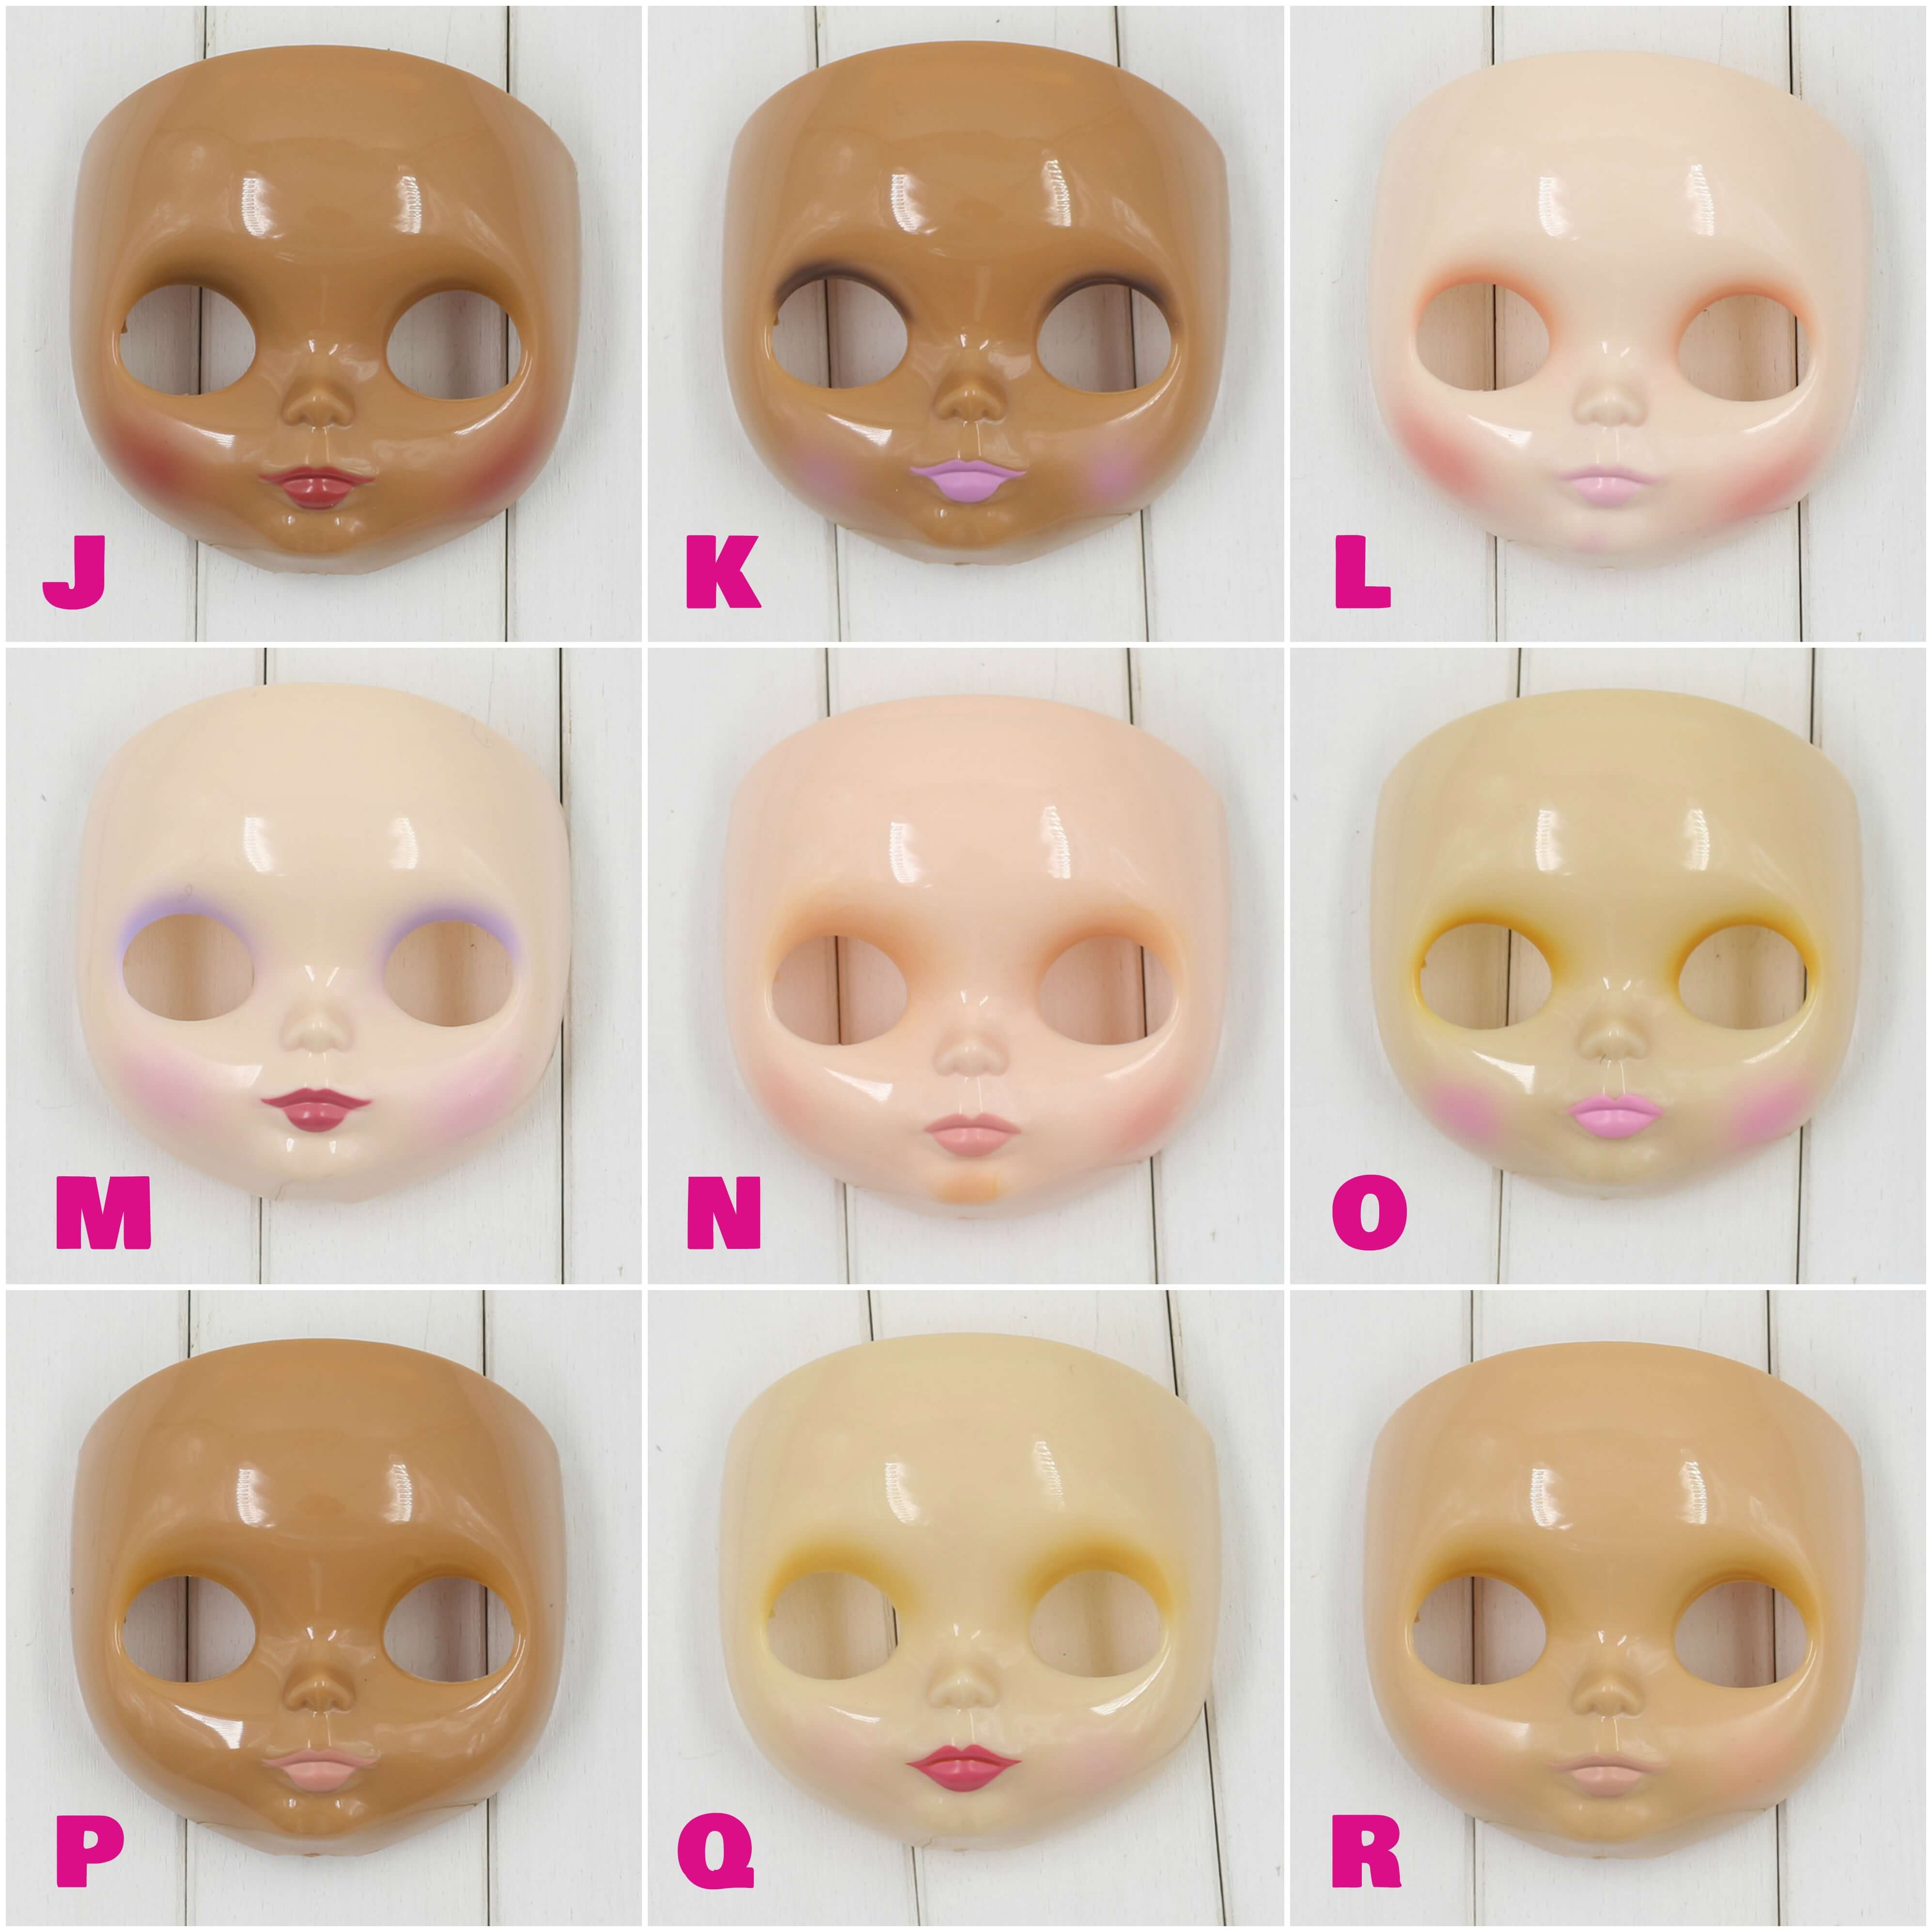 Build Your Own Blythe Doll Neo Blythe Customizer Tool 100 Hair Options 2